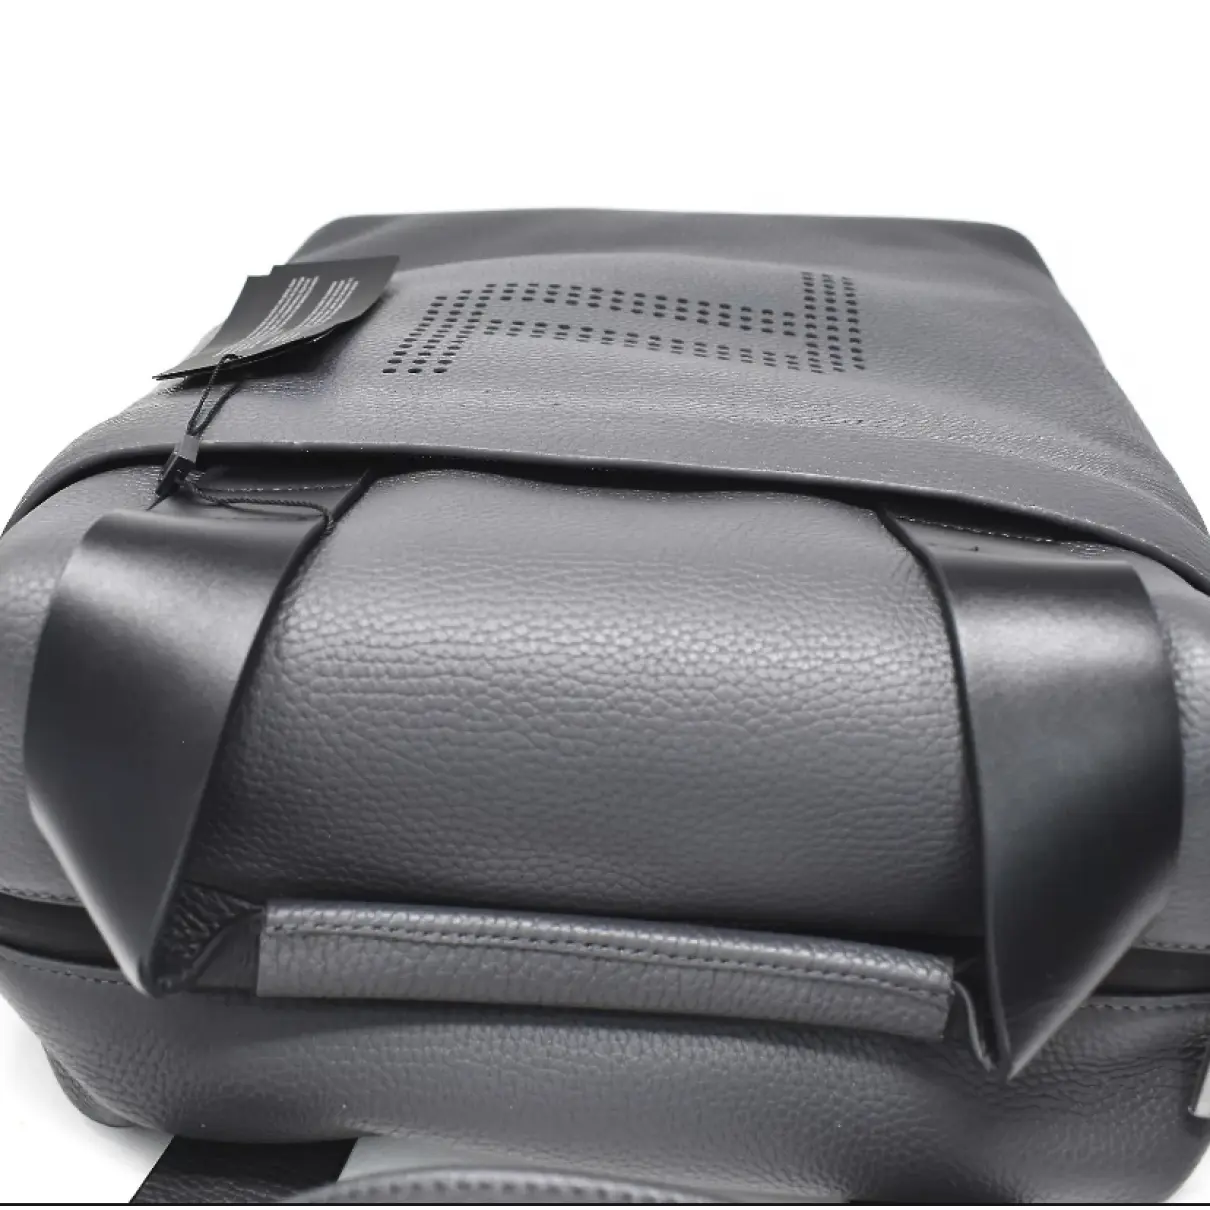 Leather travel bag Porsche Design